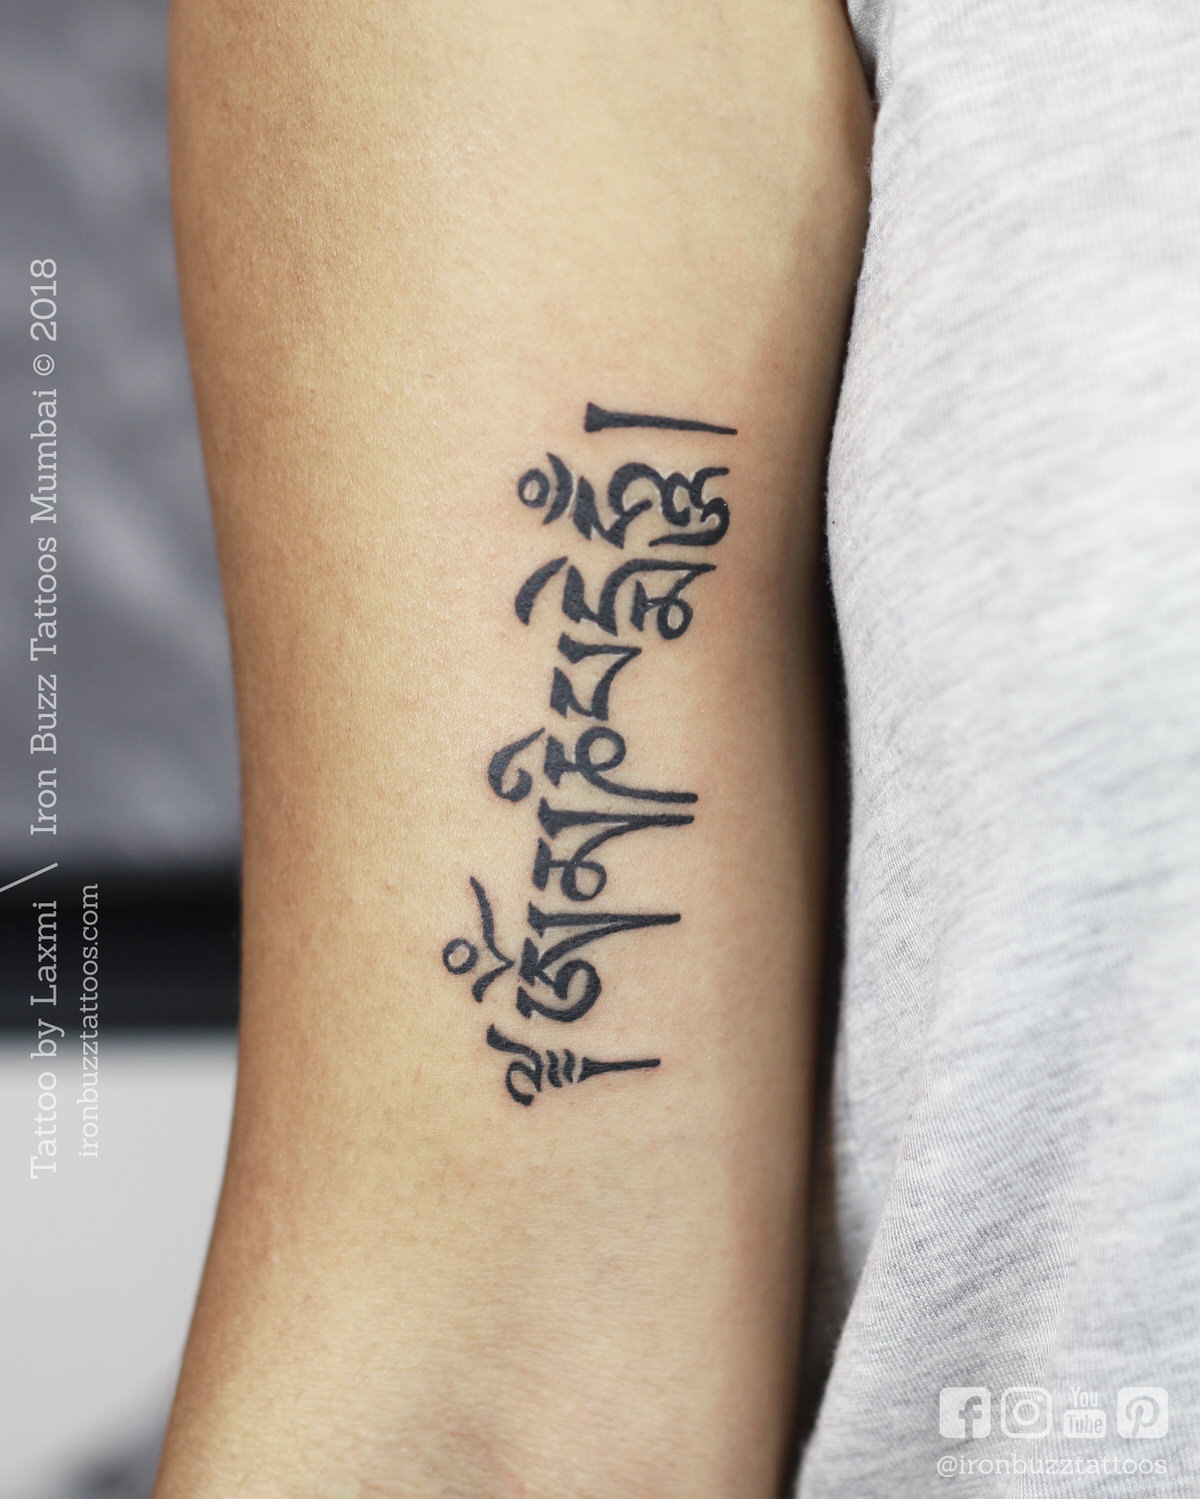 Aadhyanksha Tattoos  Tattoo Artist  Selfemployed  LinkedIn